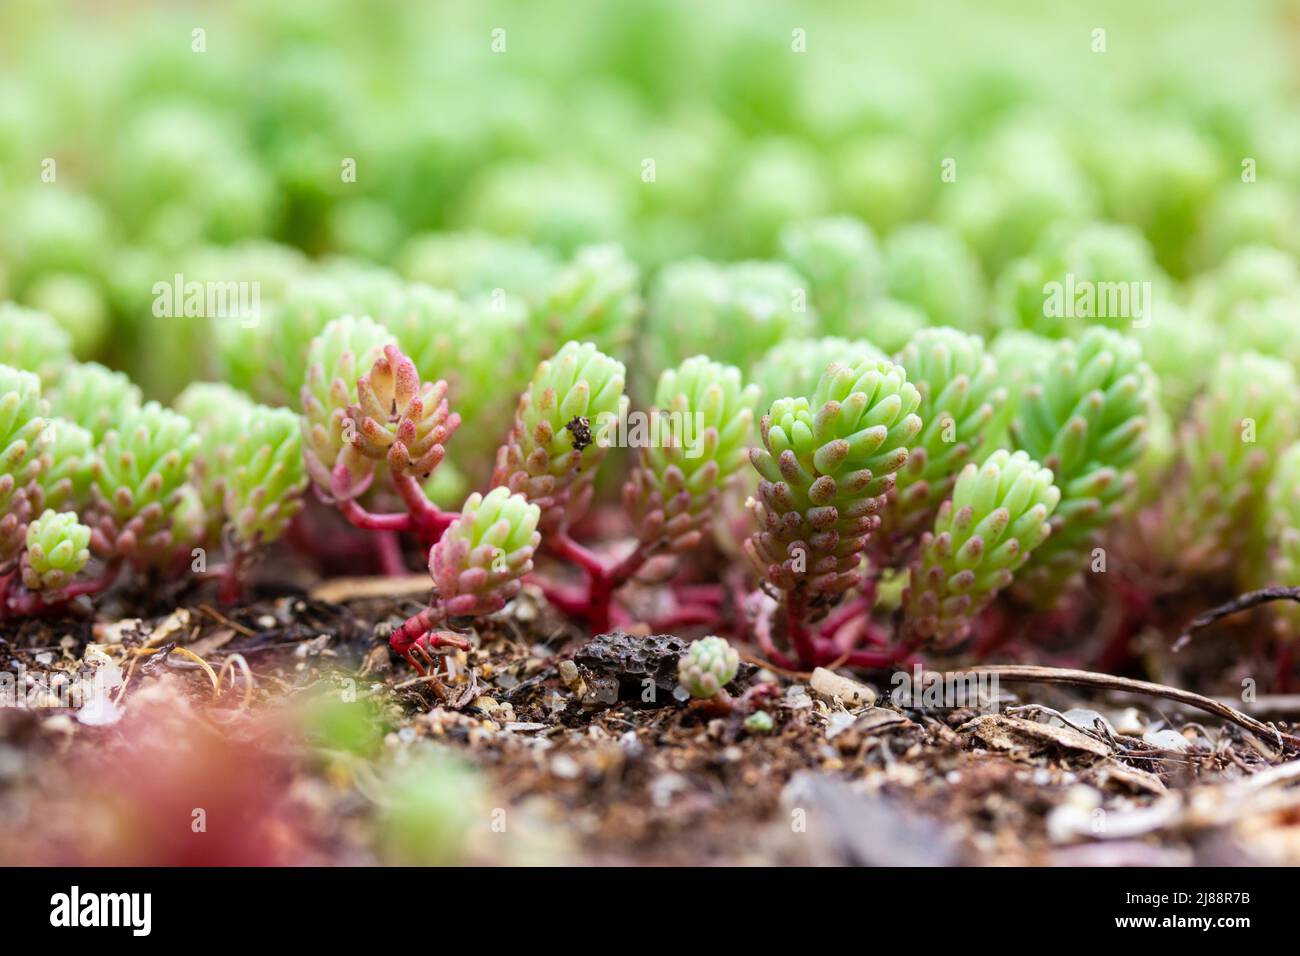 Sedum hispanicum carpet growing in a soil. Sedum rubrotinctum jelly bean plants. Stock Photo